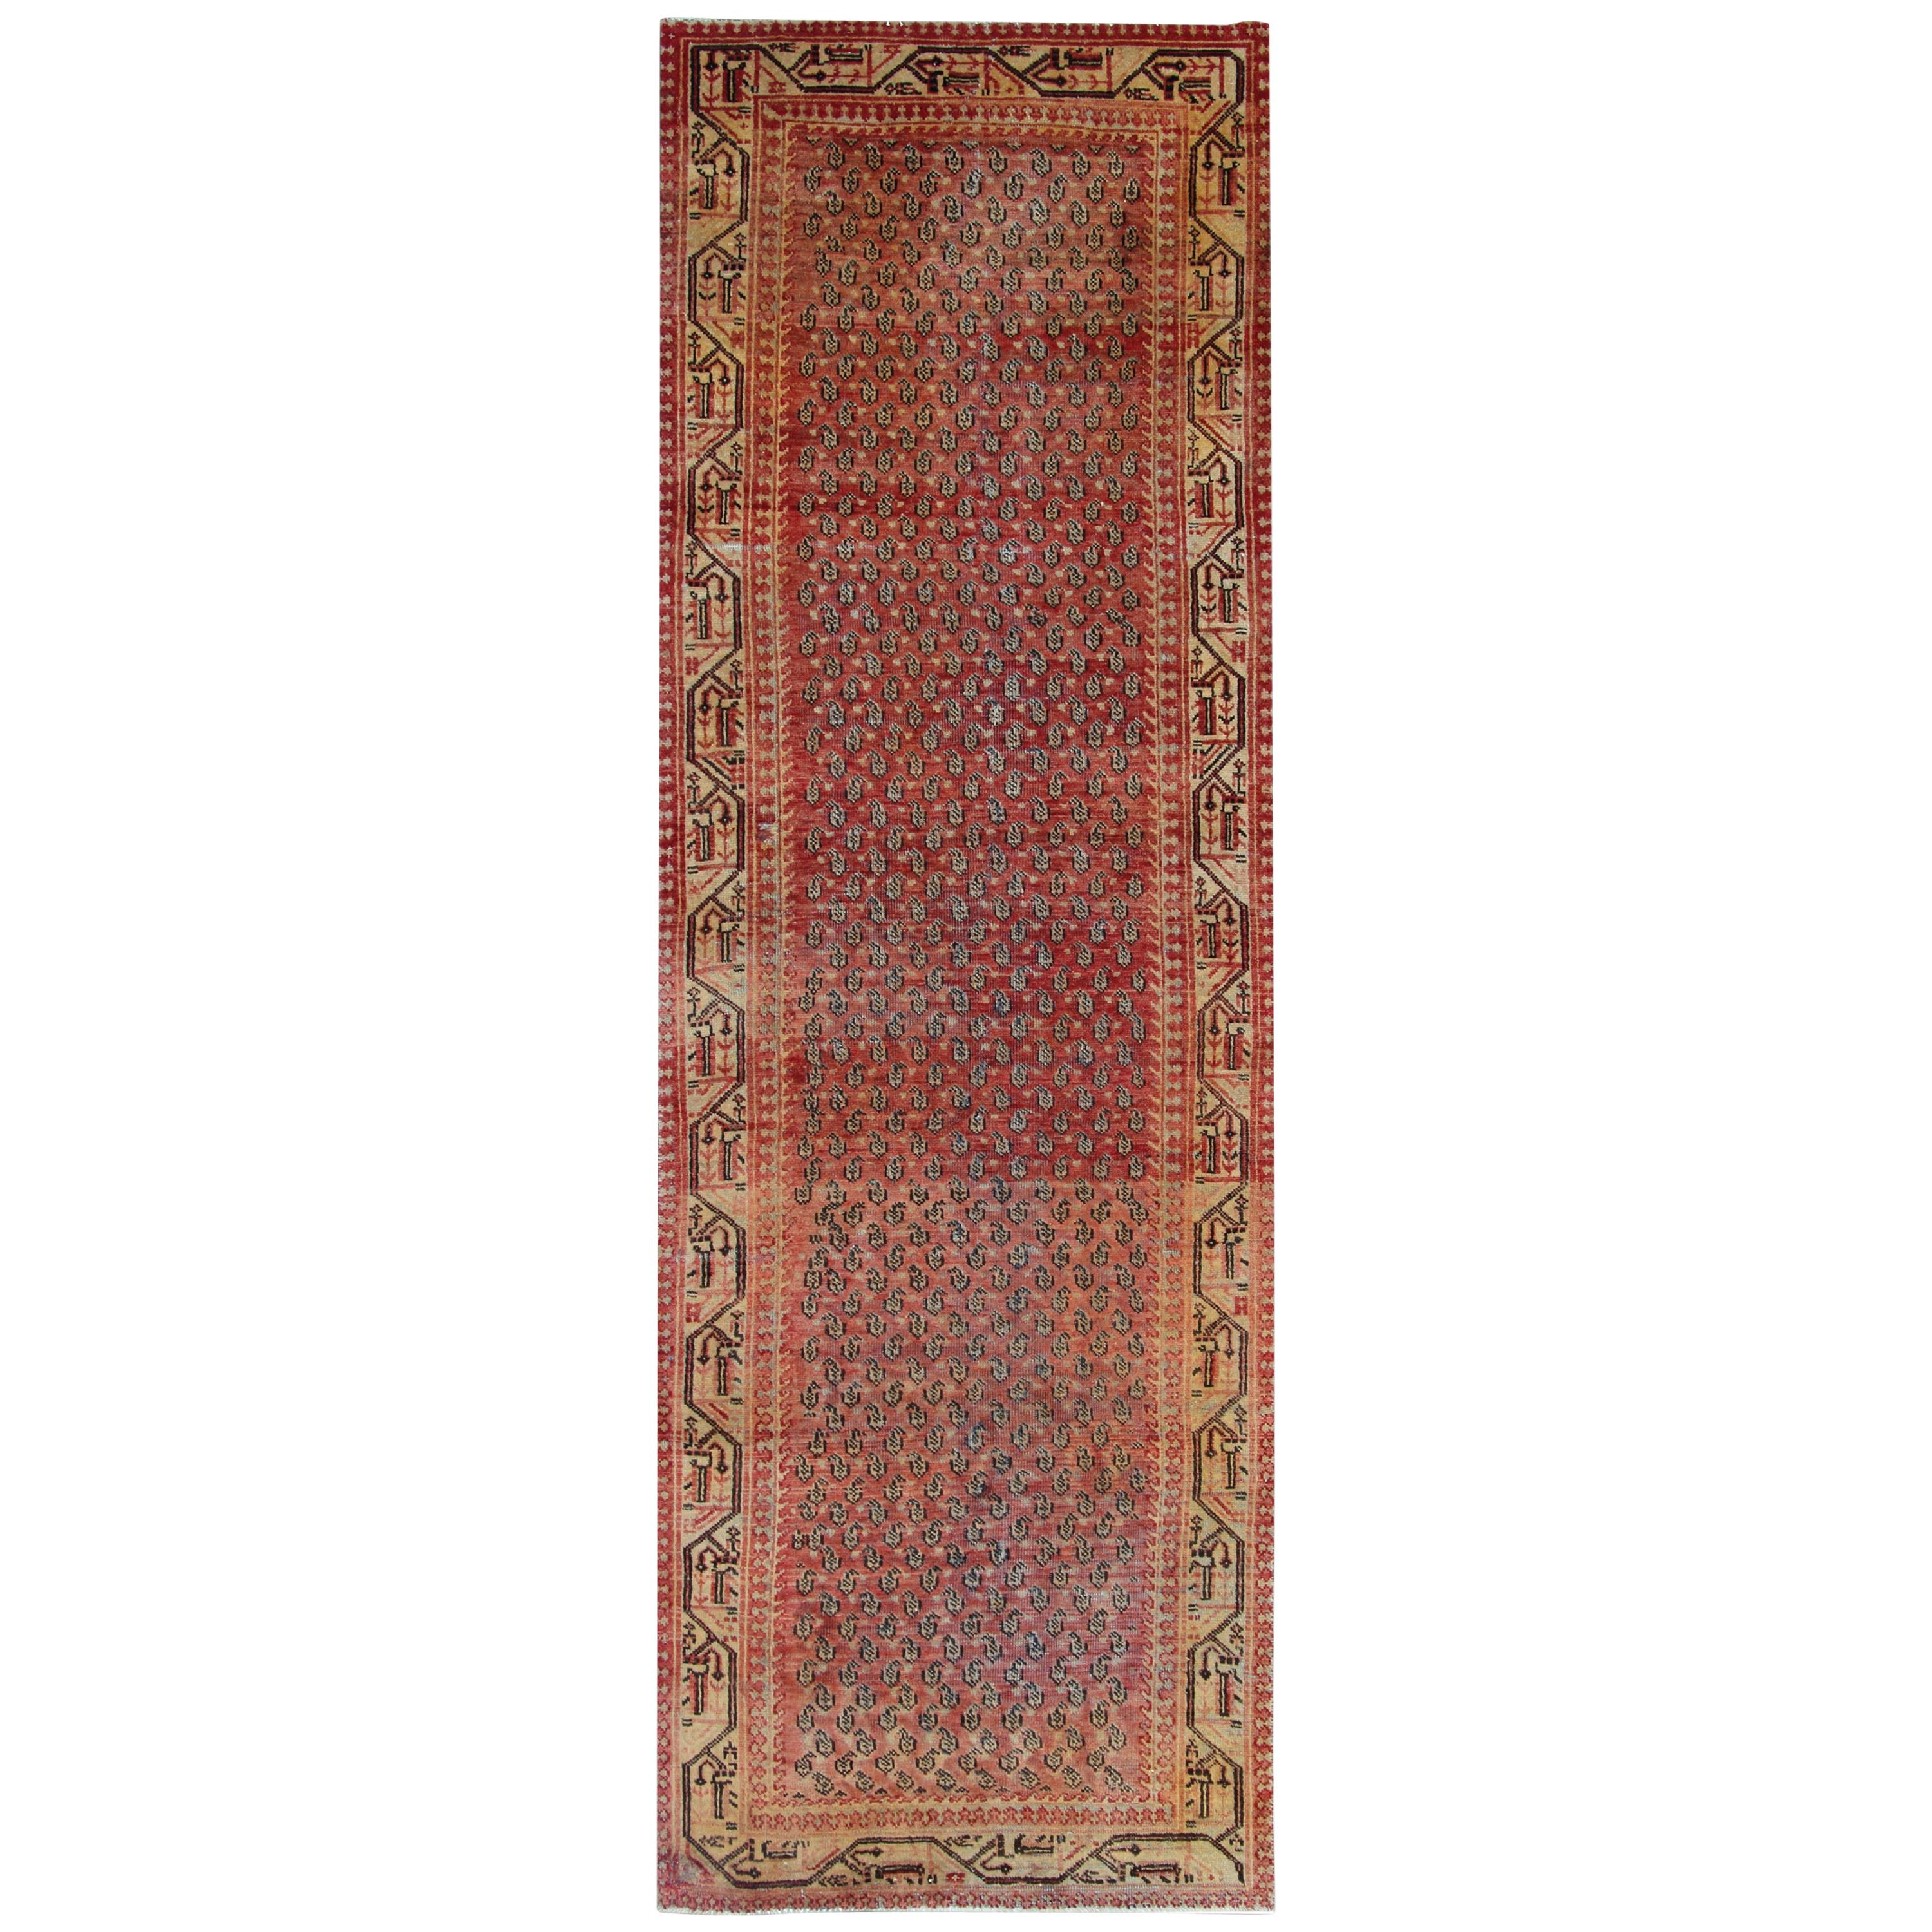 Vintage Handmade Runner Rug, Traditional Orange Wool Carpet Area Rug